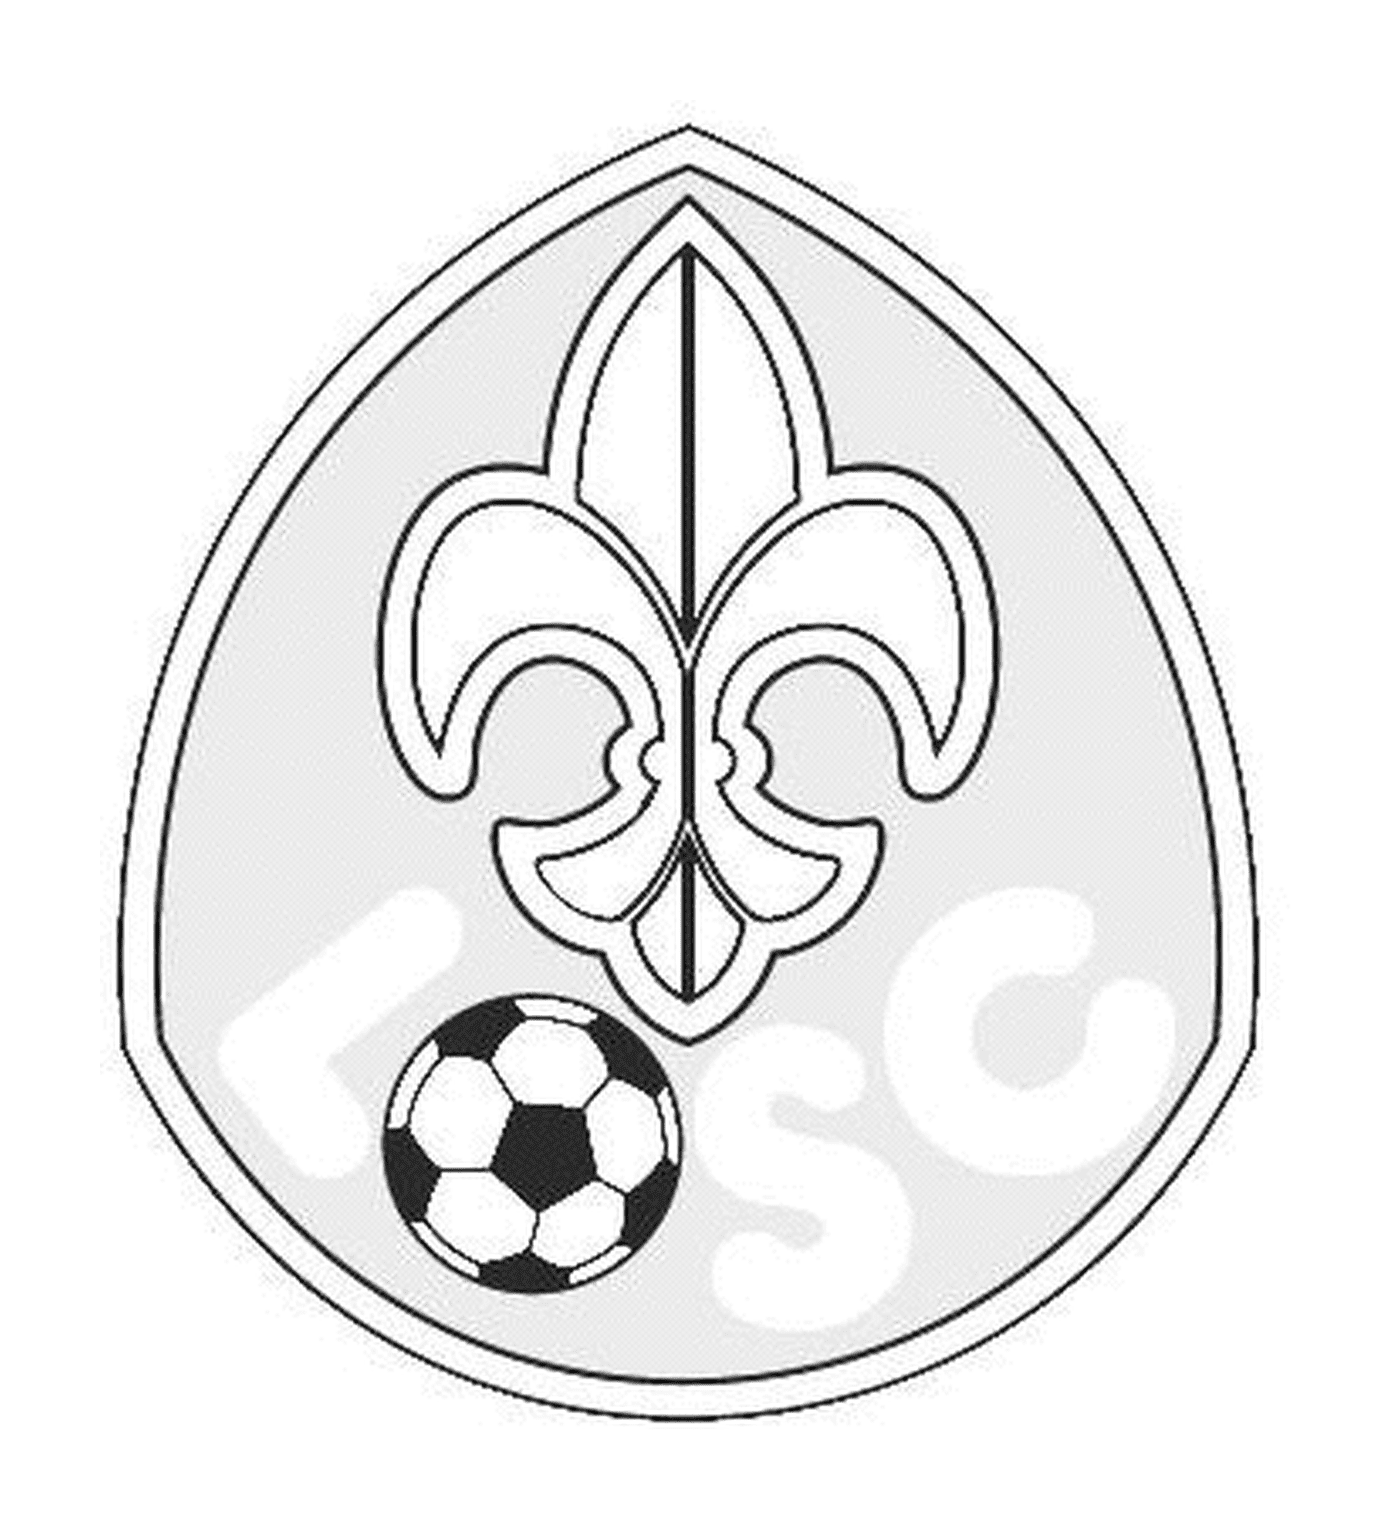  Логотип LOSC Lille 